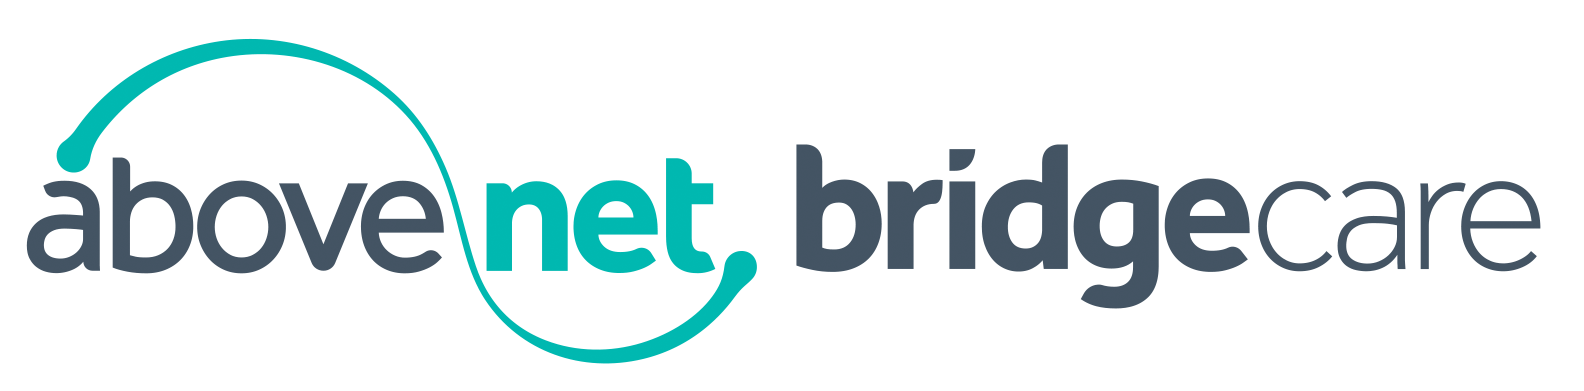 Bridgecare Above-Net